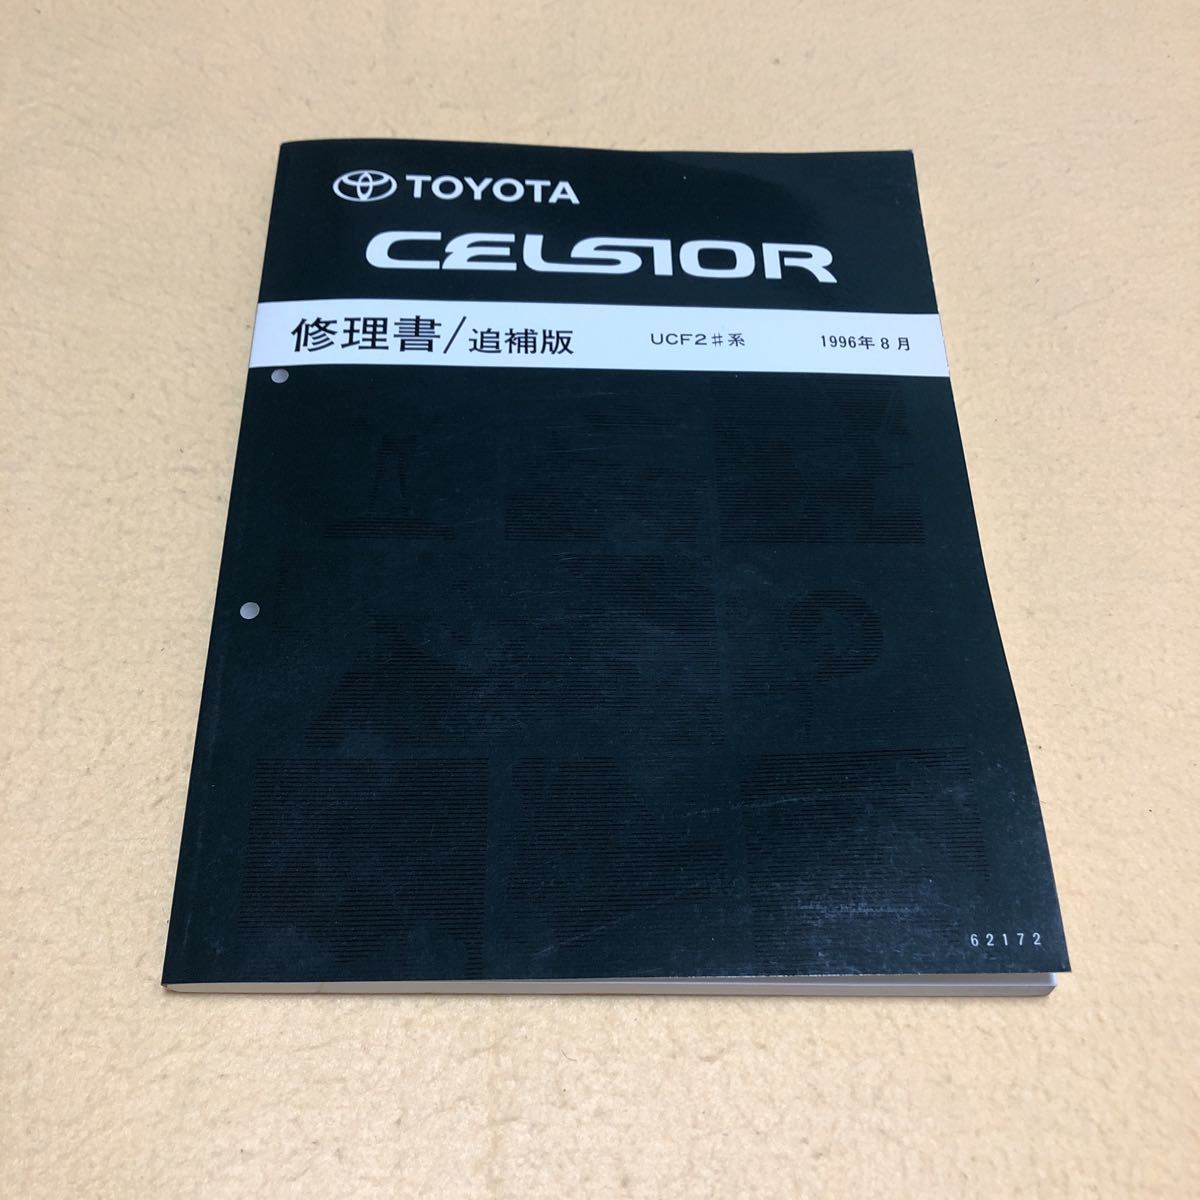  Celsior CELSIOR UCF20 UCF21 1996 год 8 месяц книга по ремонту приложение *